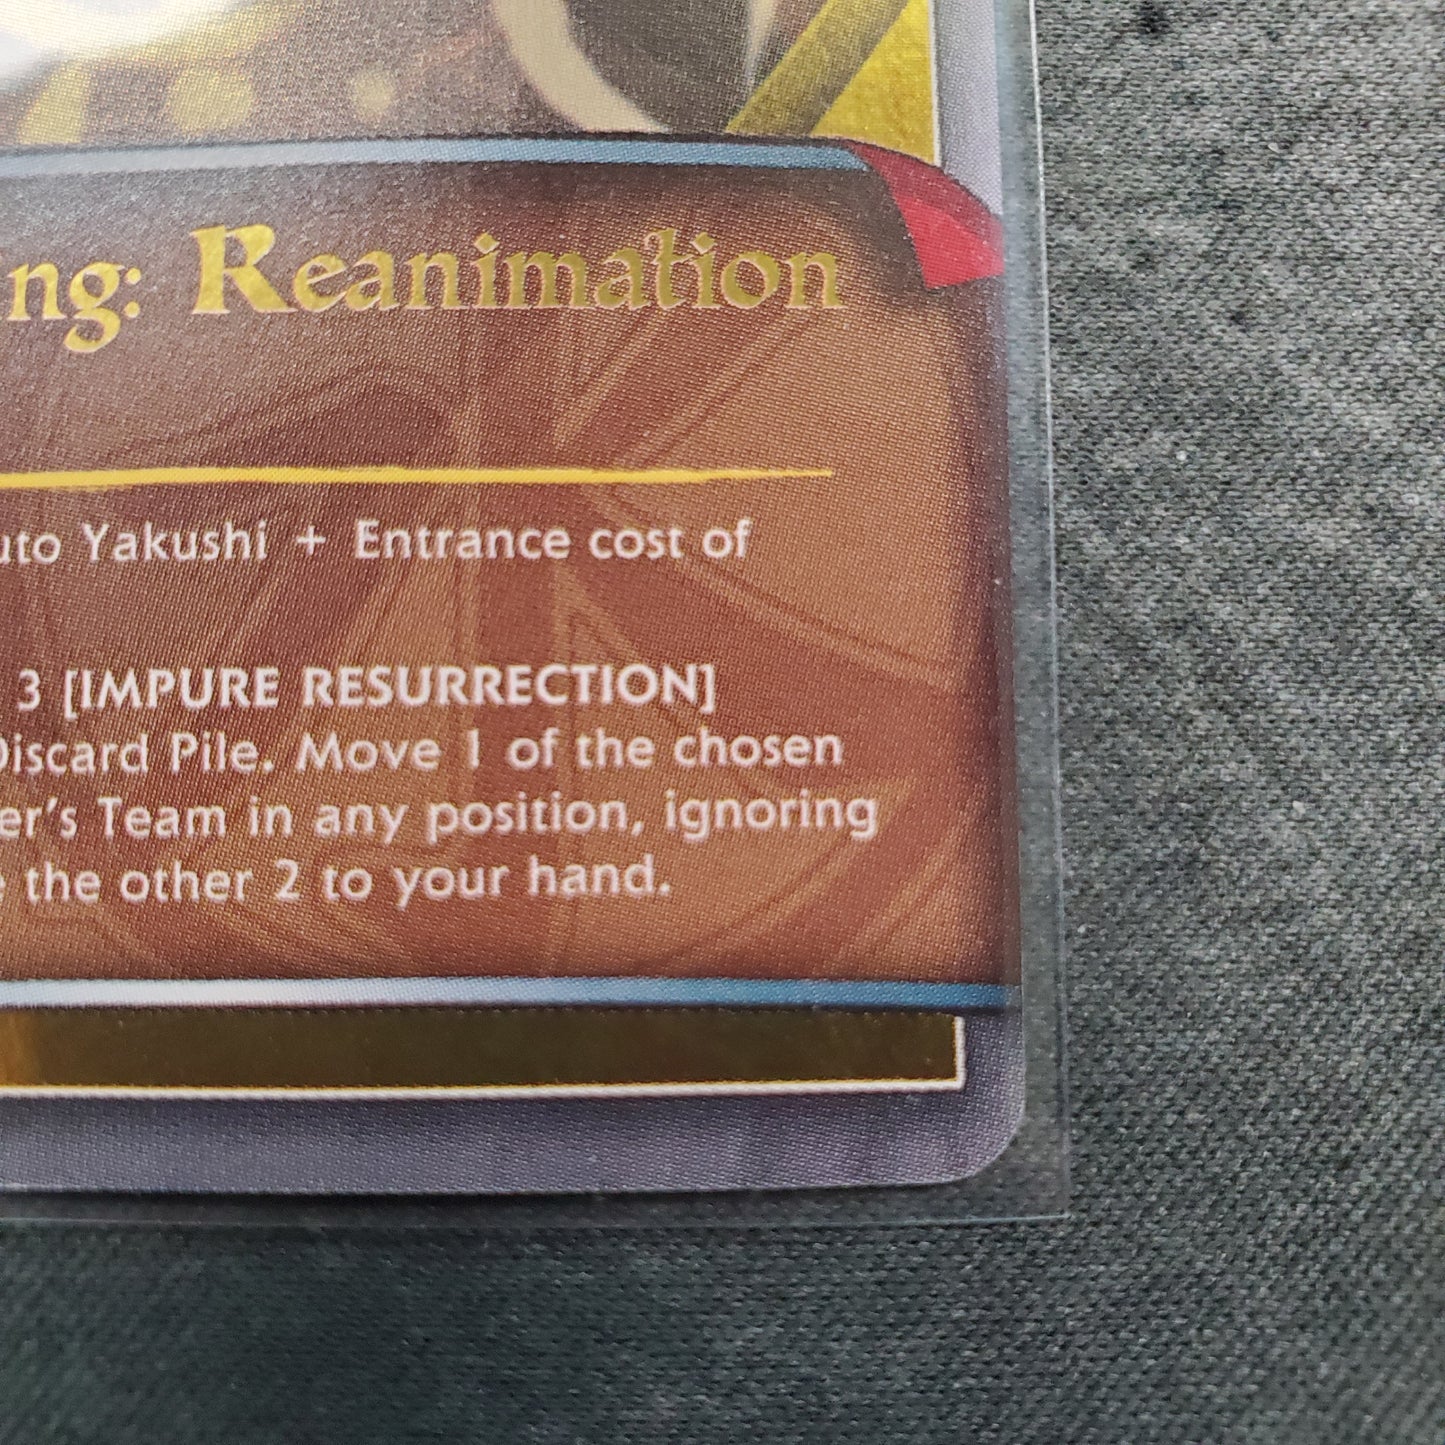 Summoning: Reanimation 1021 Super Rare S28 Naruto CCG